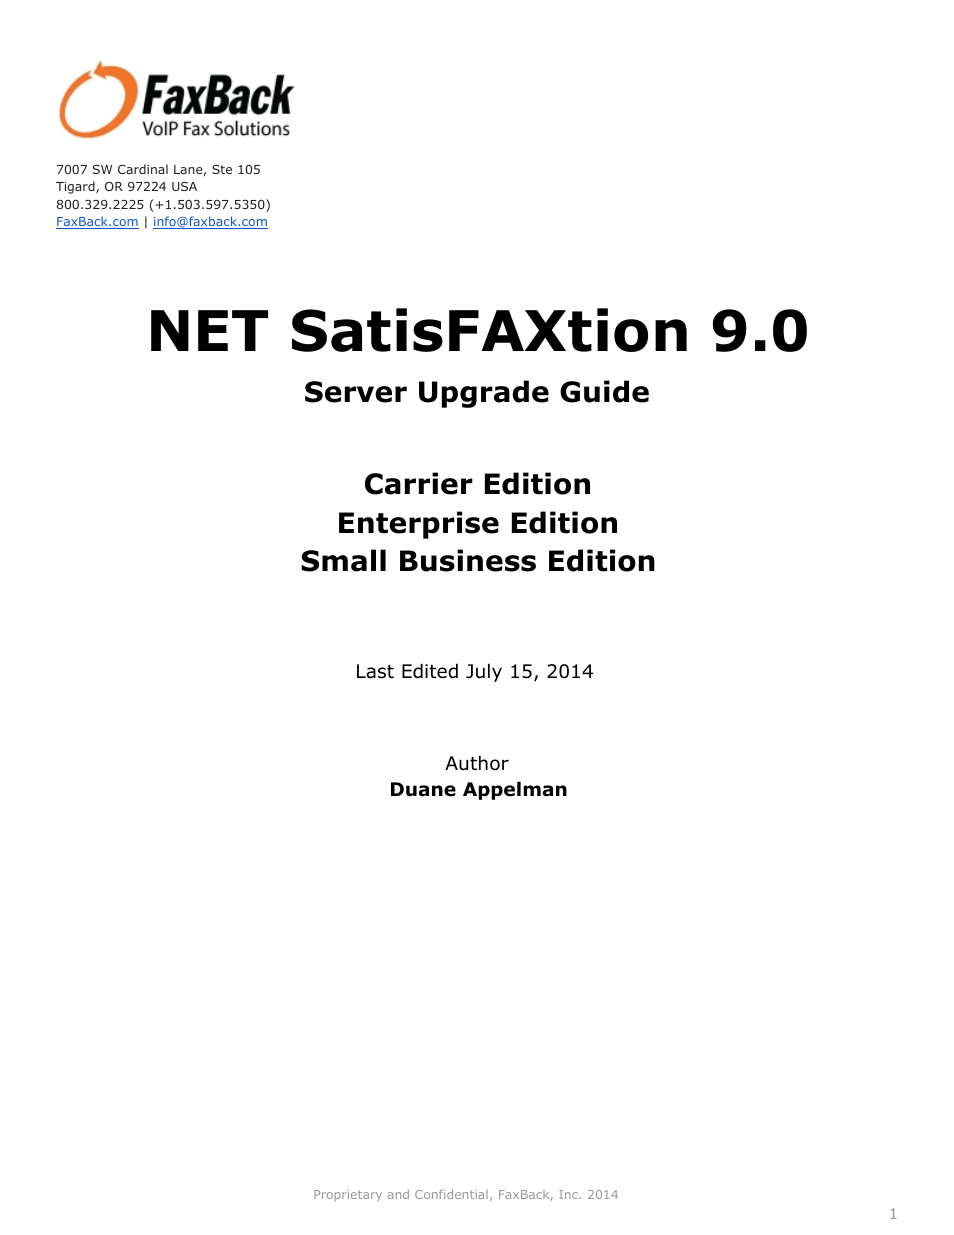 NET SatisFAXtion 9.0 - Server Upgrade Guide